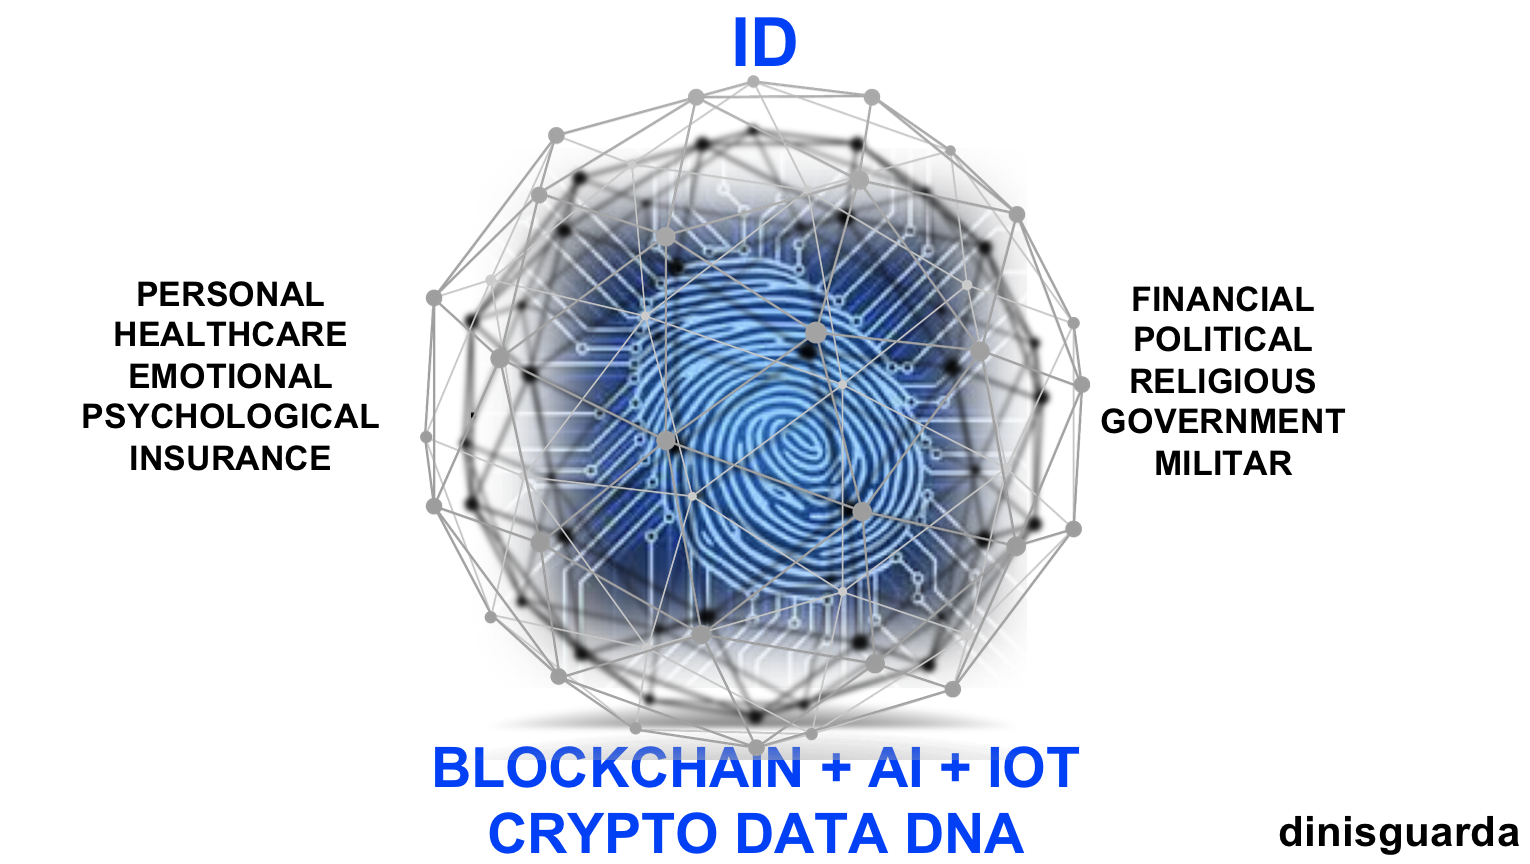 Blockchain ID matric by Dinis Guarda